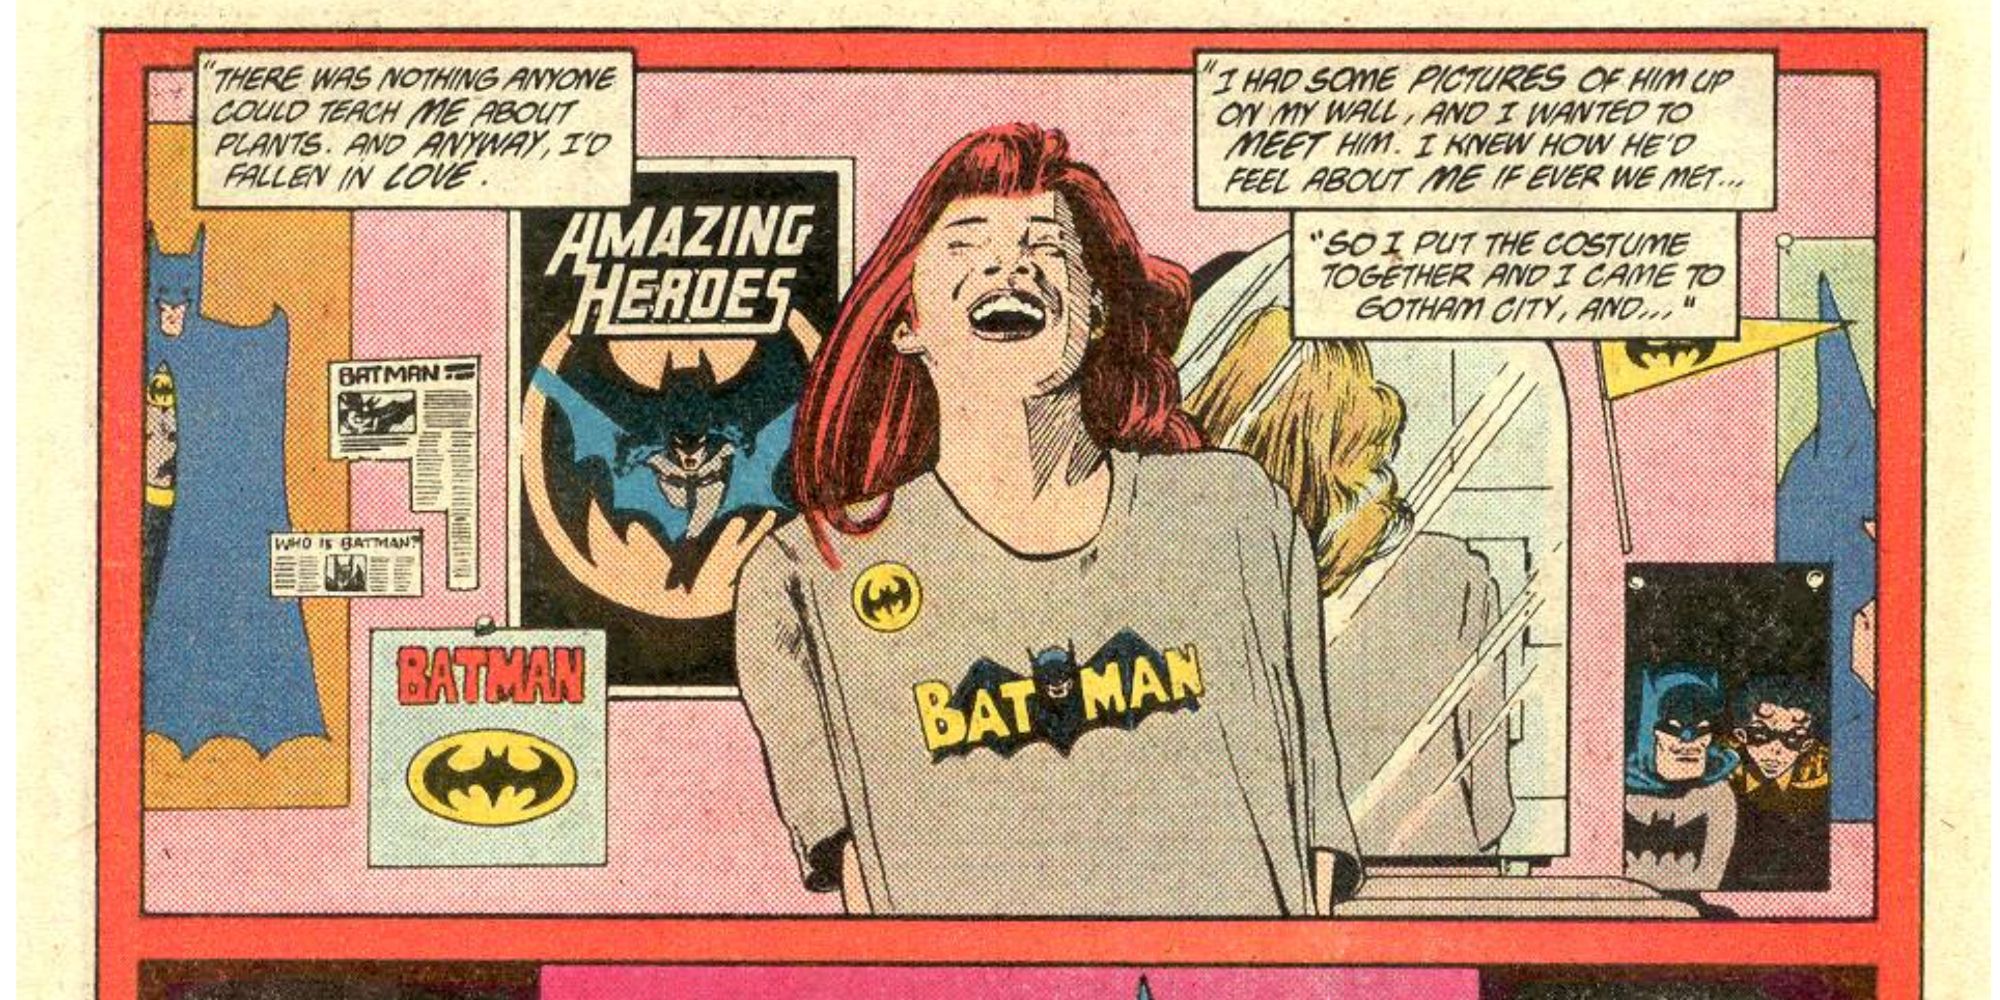 Poison Ivy wears a Batman shirt in DC Comics.